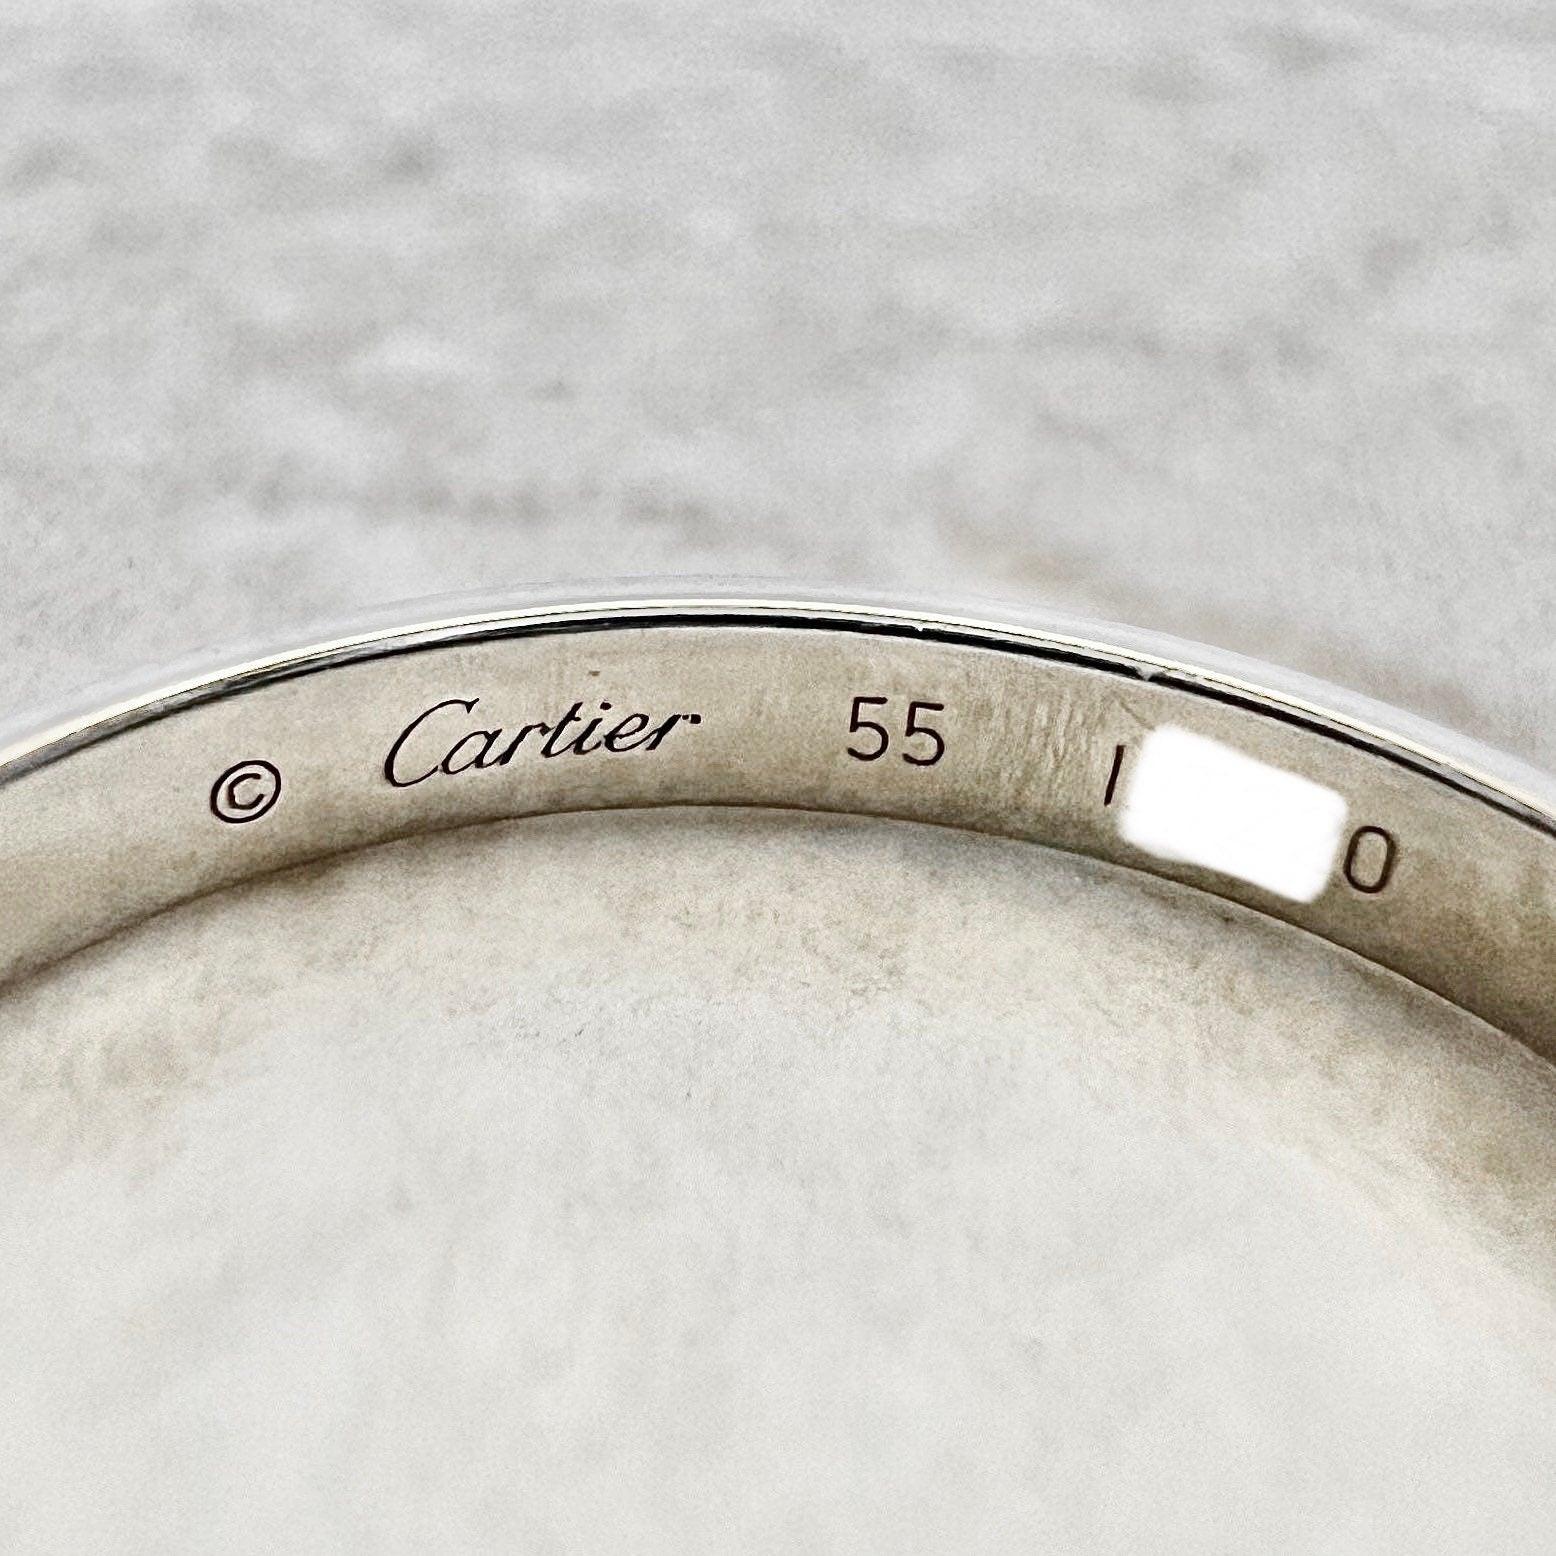 Platinum Cartier 1895 Wedding Band 2.5 mm - Size 7.25 US / 55 FR / O 1/2 UK - WeilJewelry